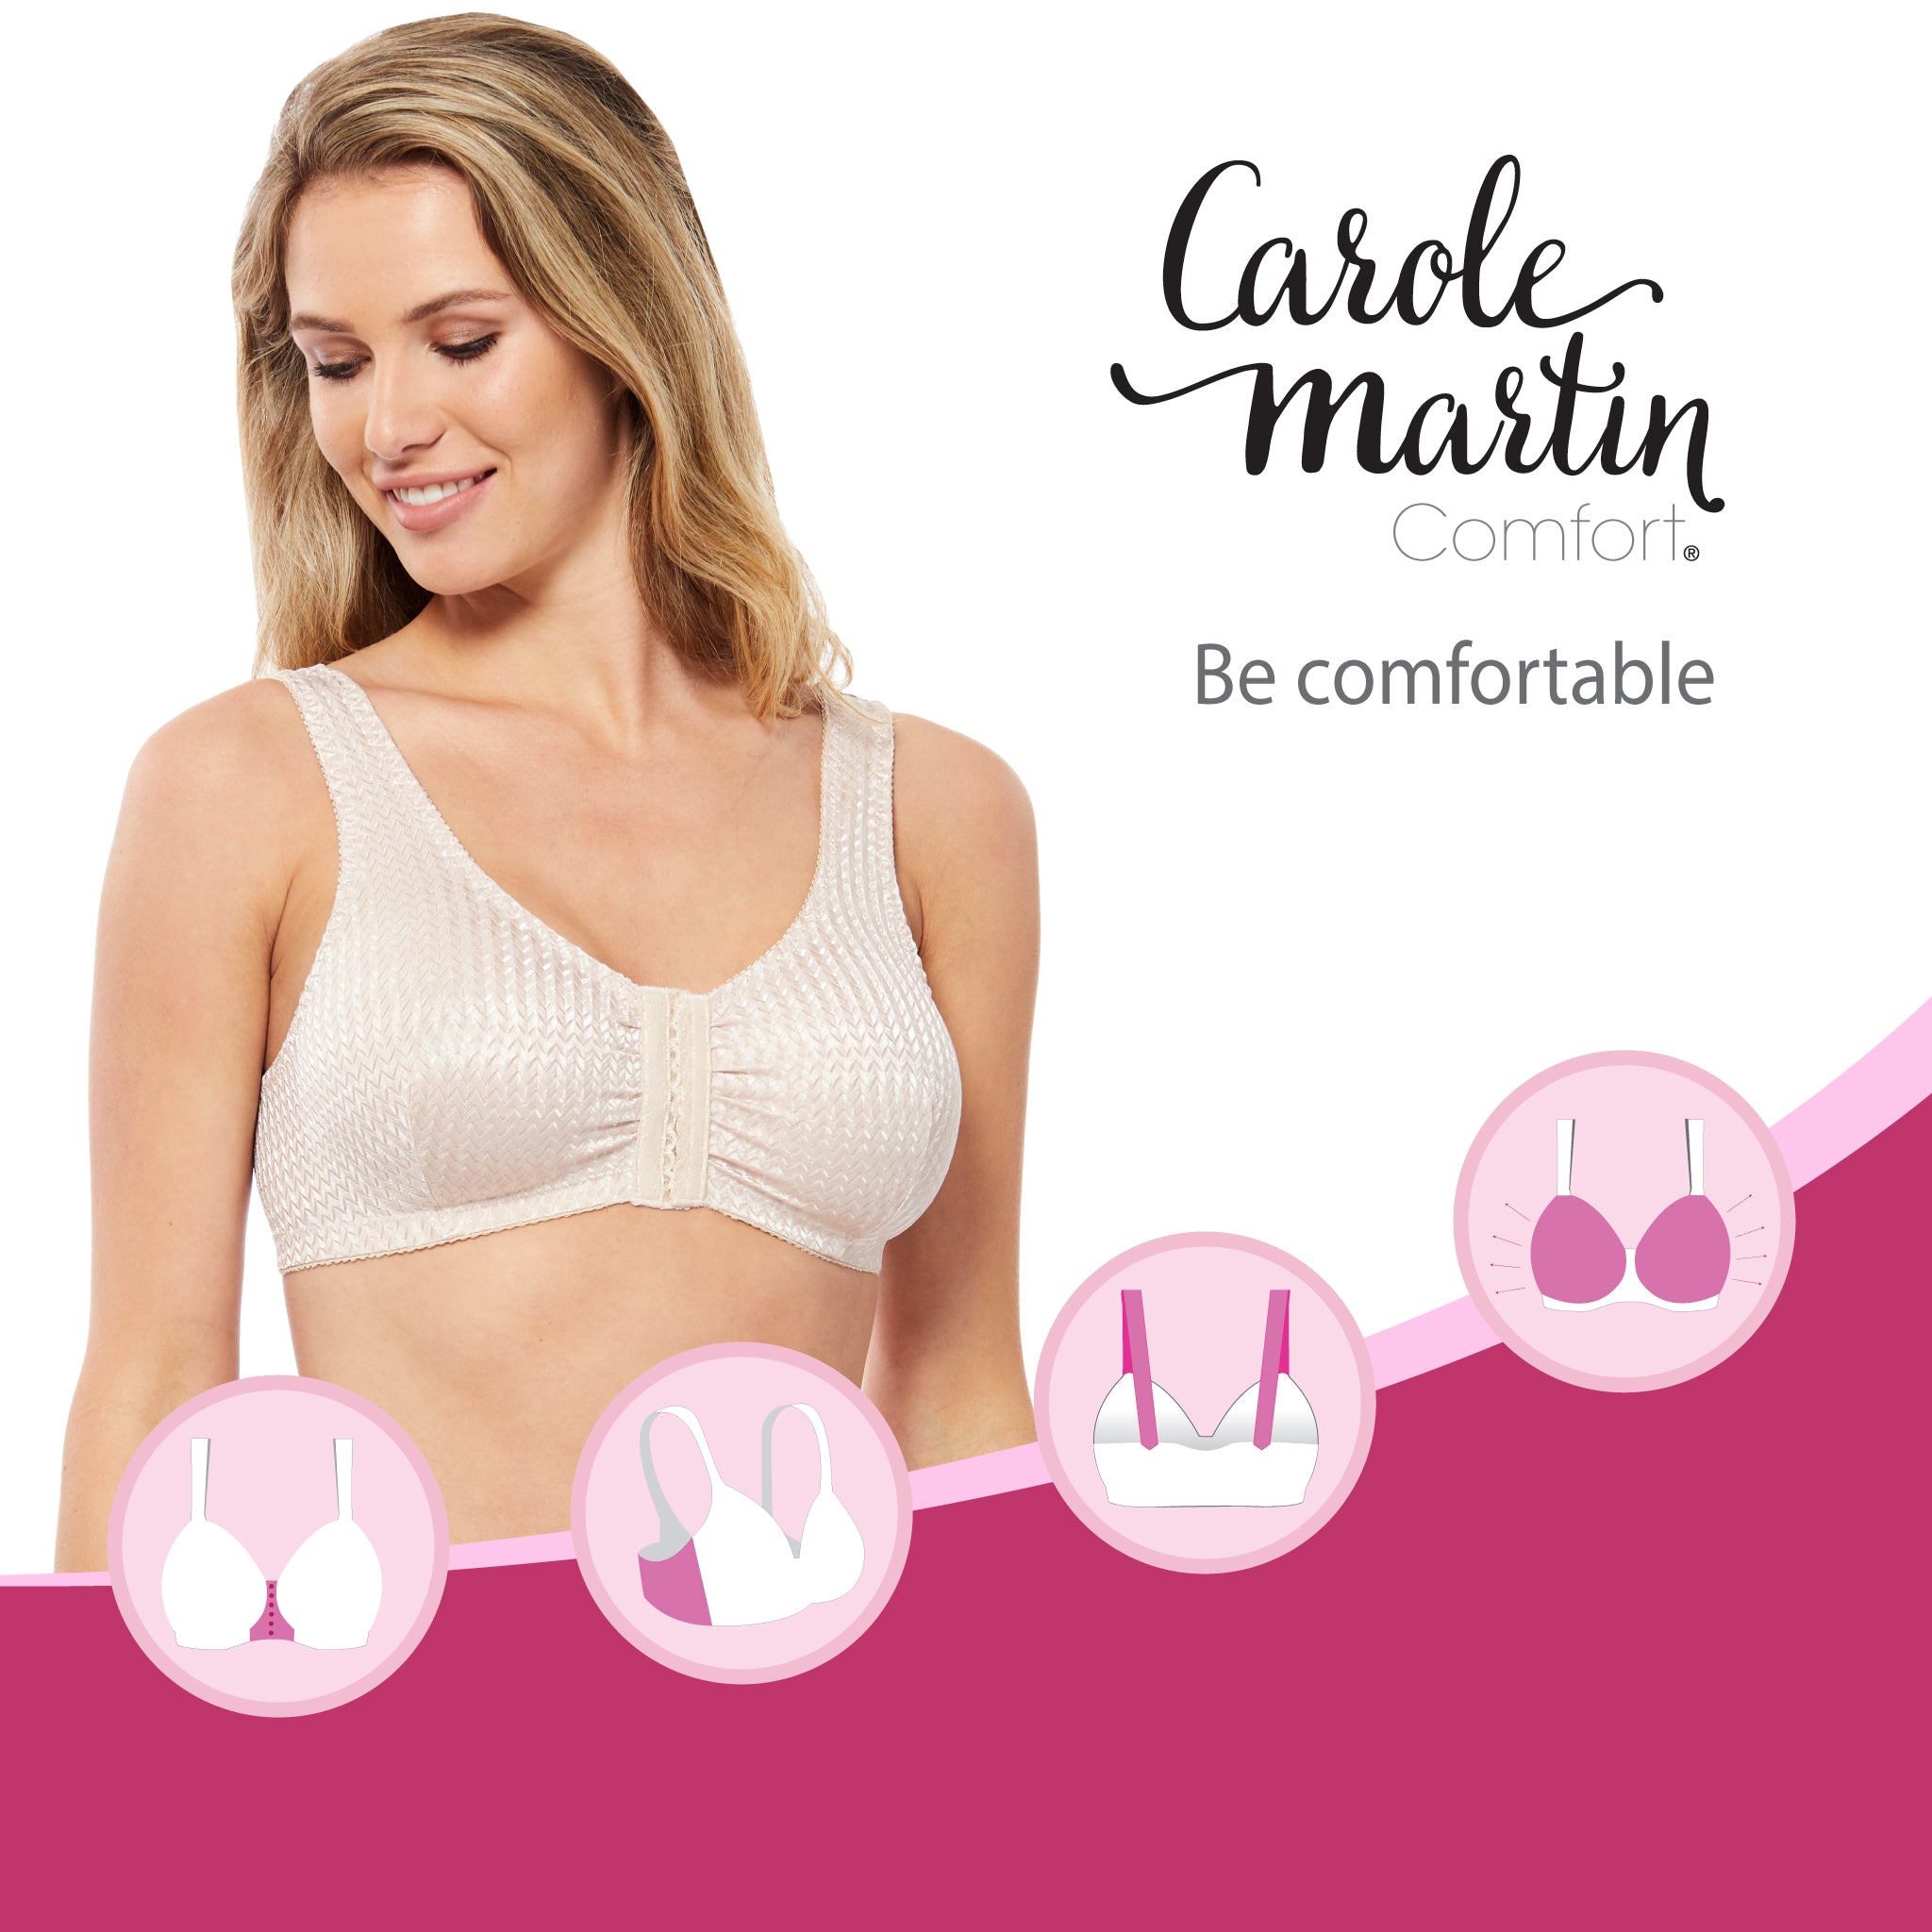 Where to Buy Carole Martin® Comfort Bras – Carole Martin USA